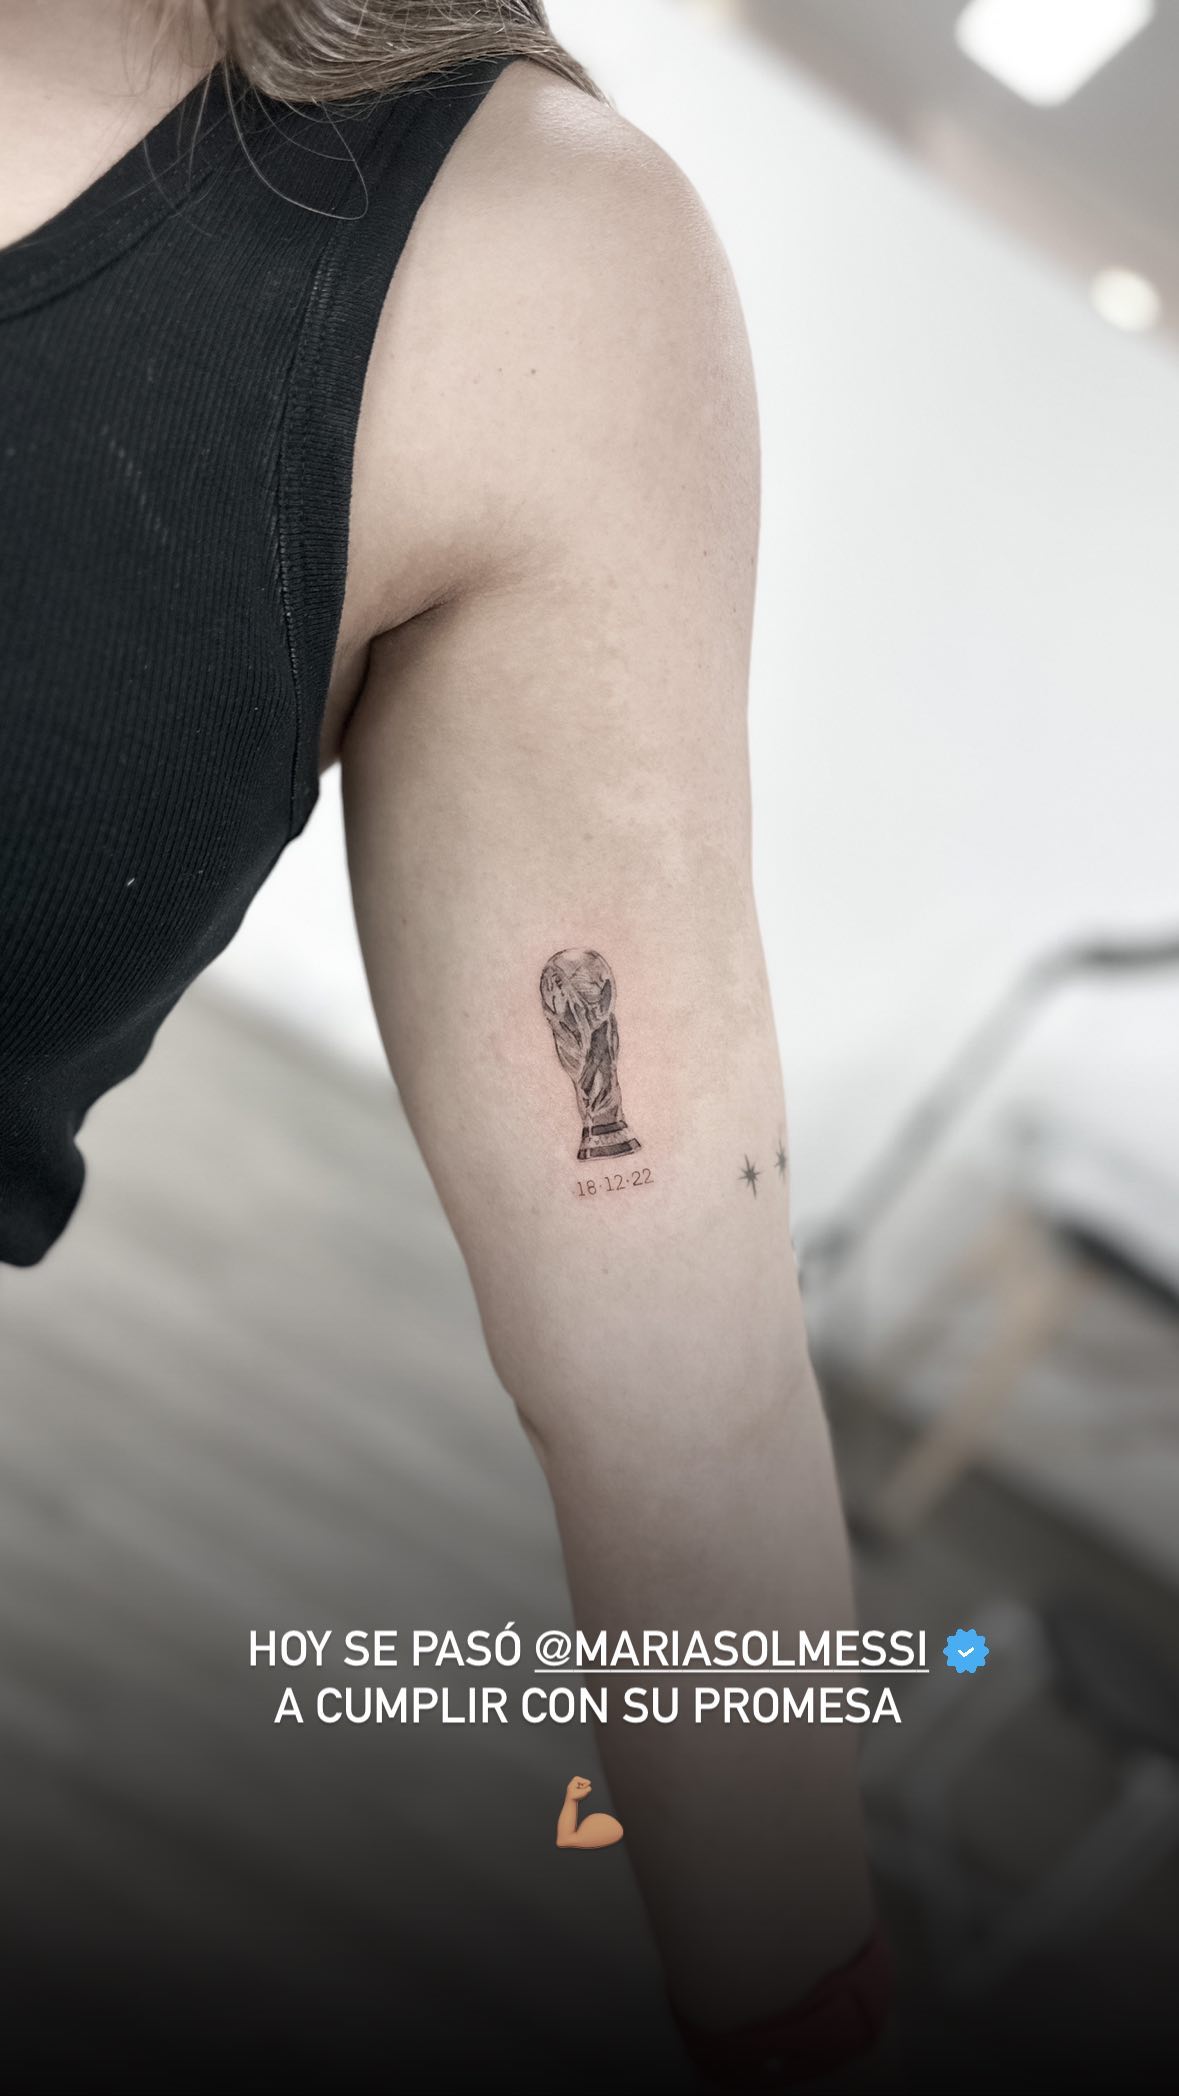 El tatuaje de la hermana de Messi realizado por Maxi Carreras.